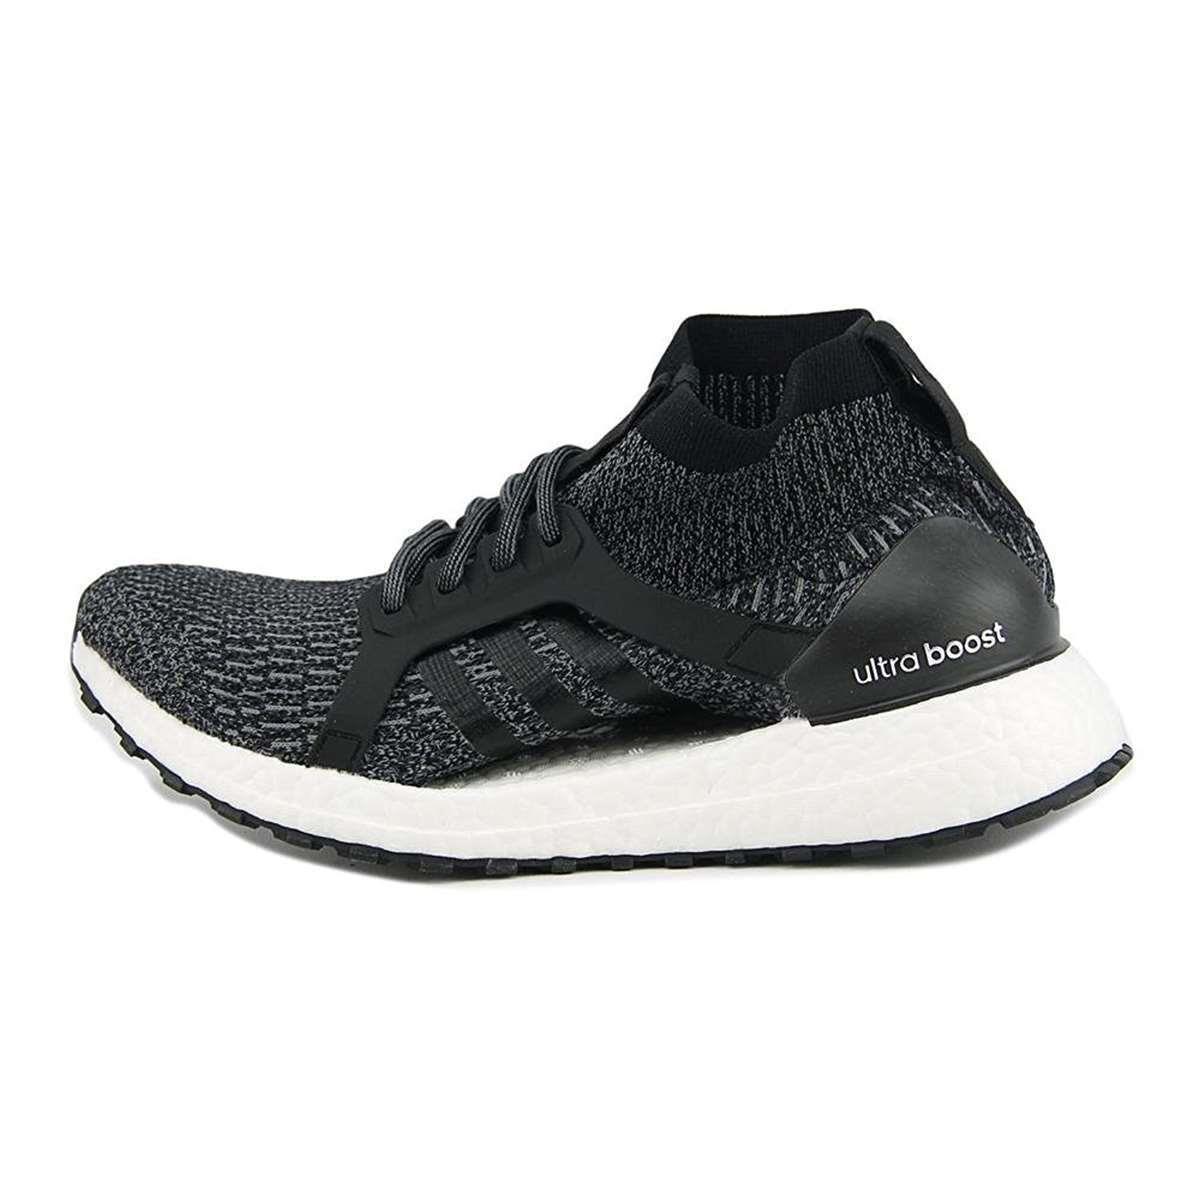 Adidas Women Ultraboost X All Terrain Training Shoes Sneakers Black